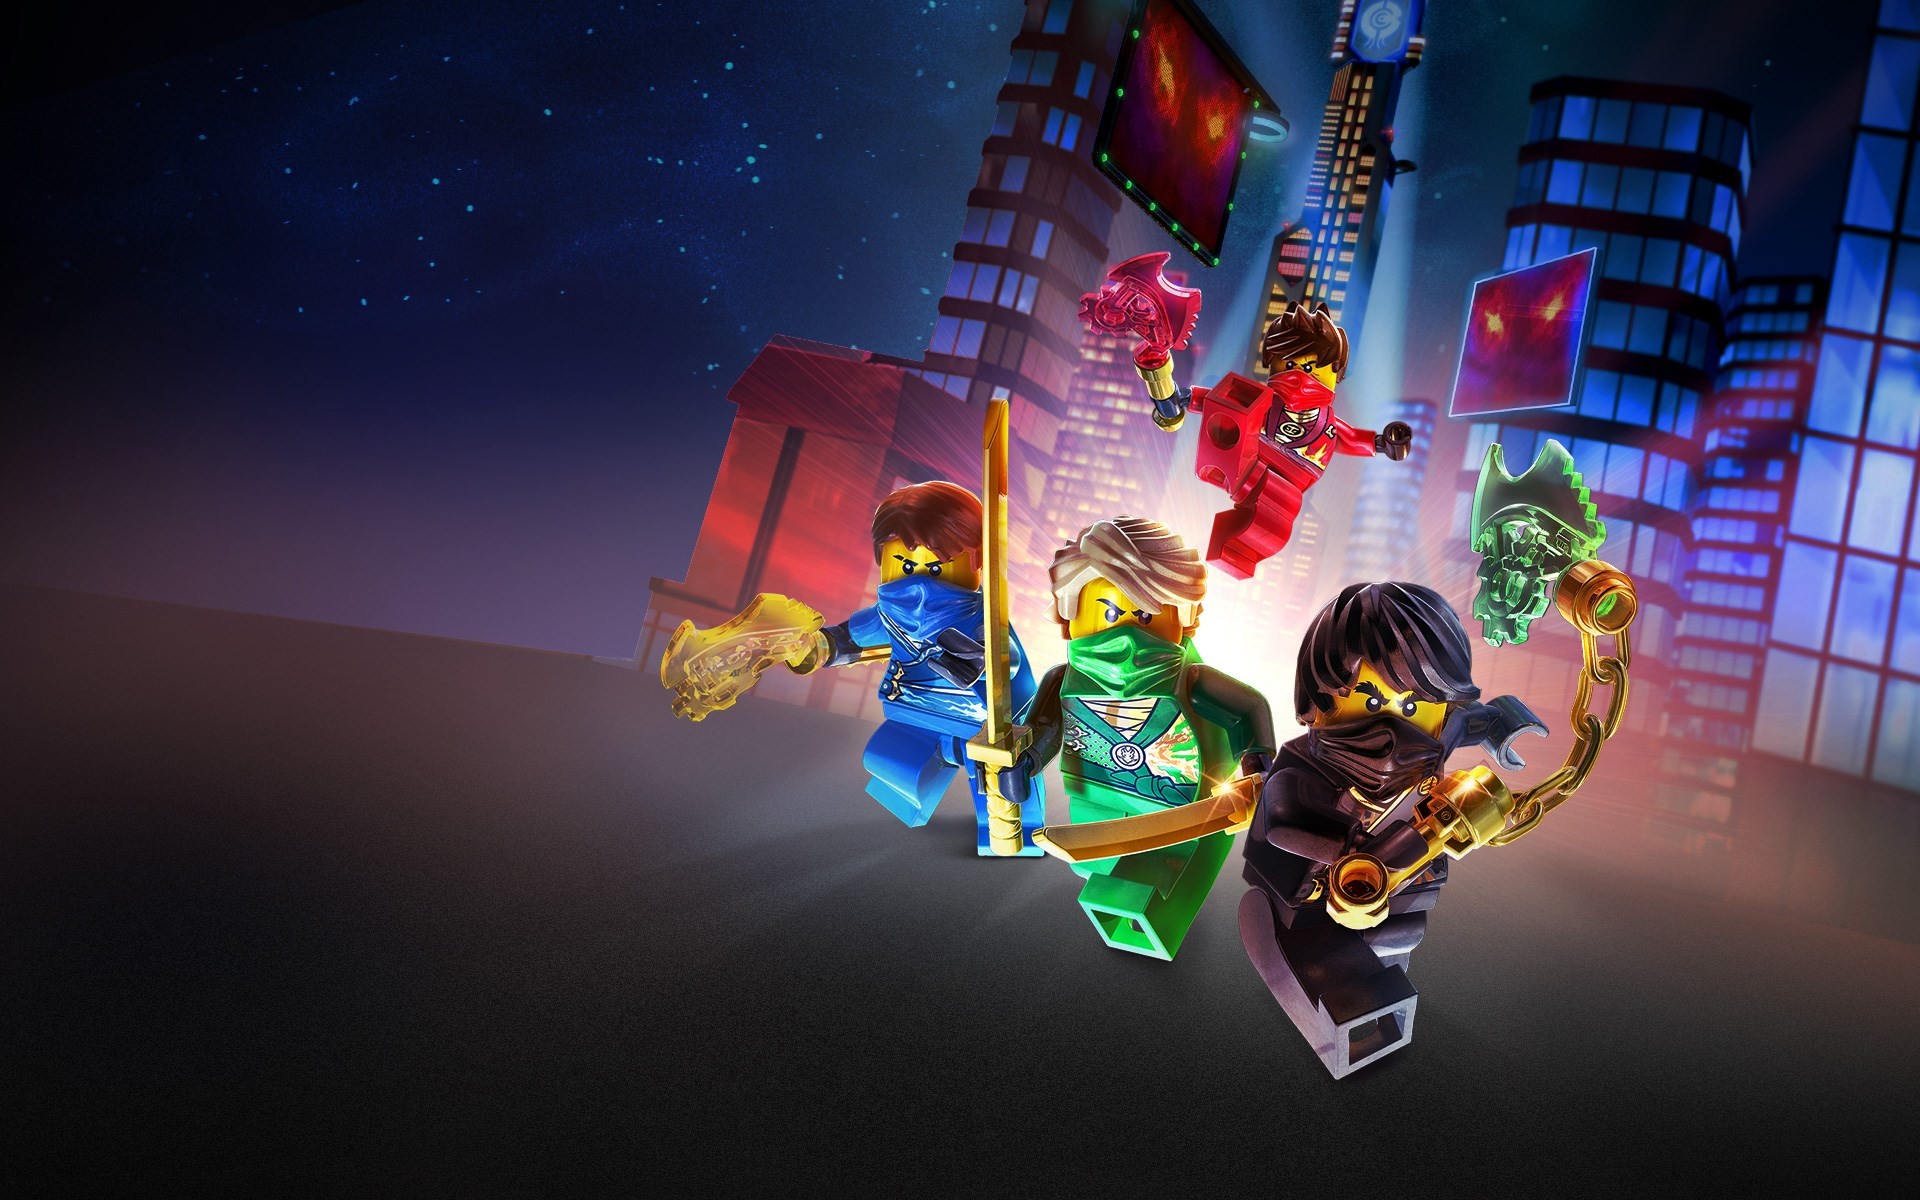 Free desktop backgrounds for lego ninjago – lego ninjago category